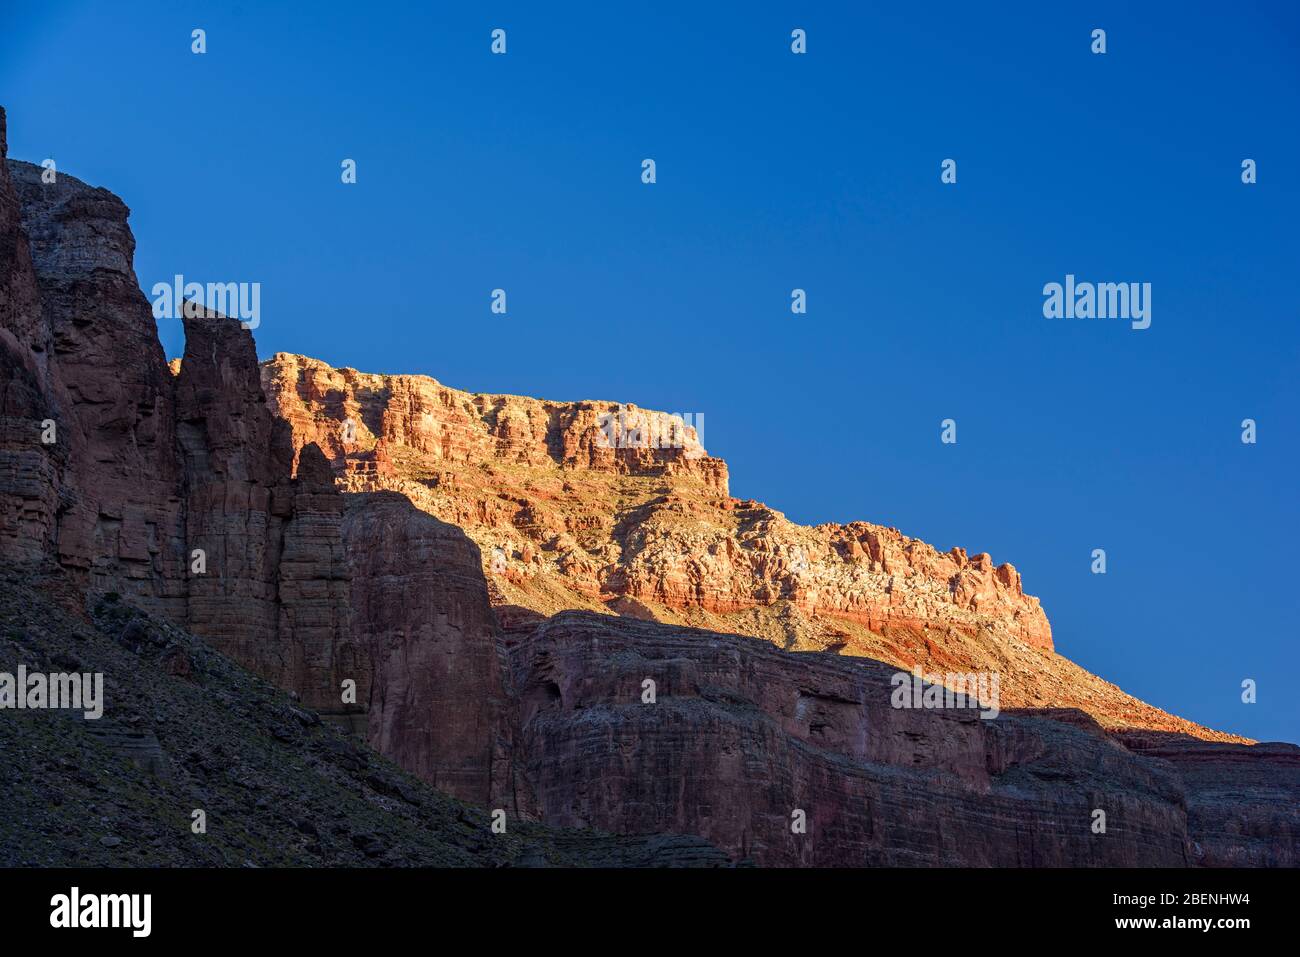 Morning light on the cliffs over Nankoweap, Grand Canyon National Park, Arizona, USA Stock Photo